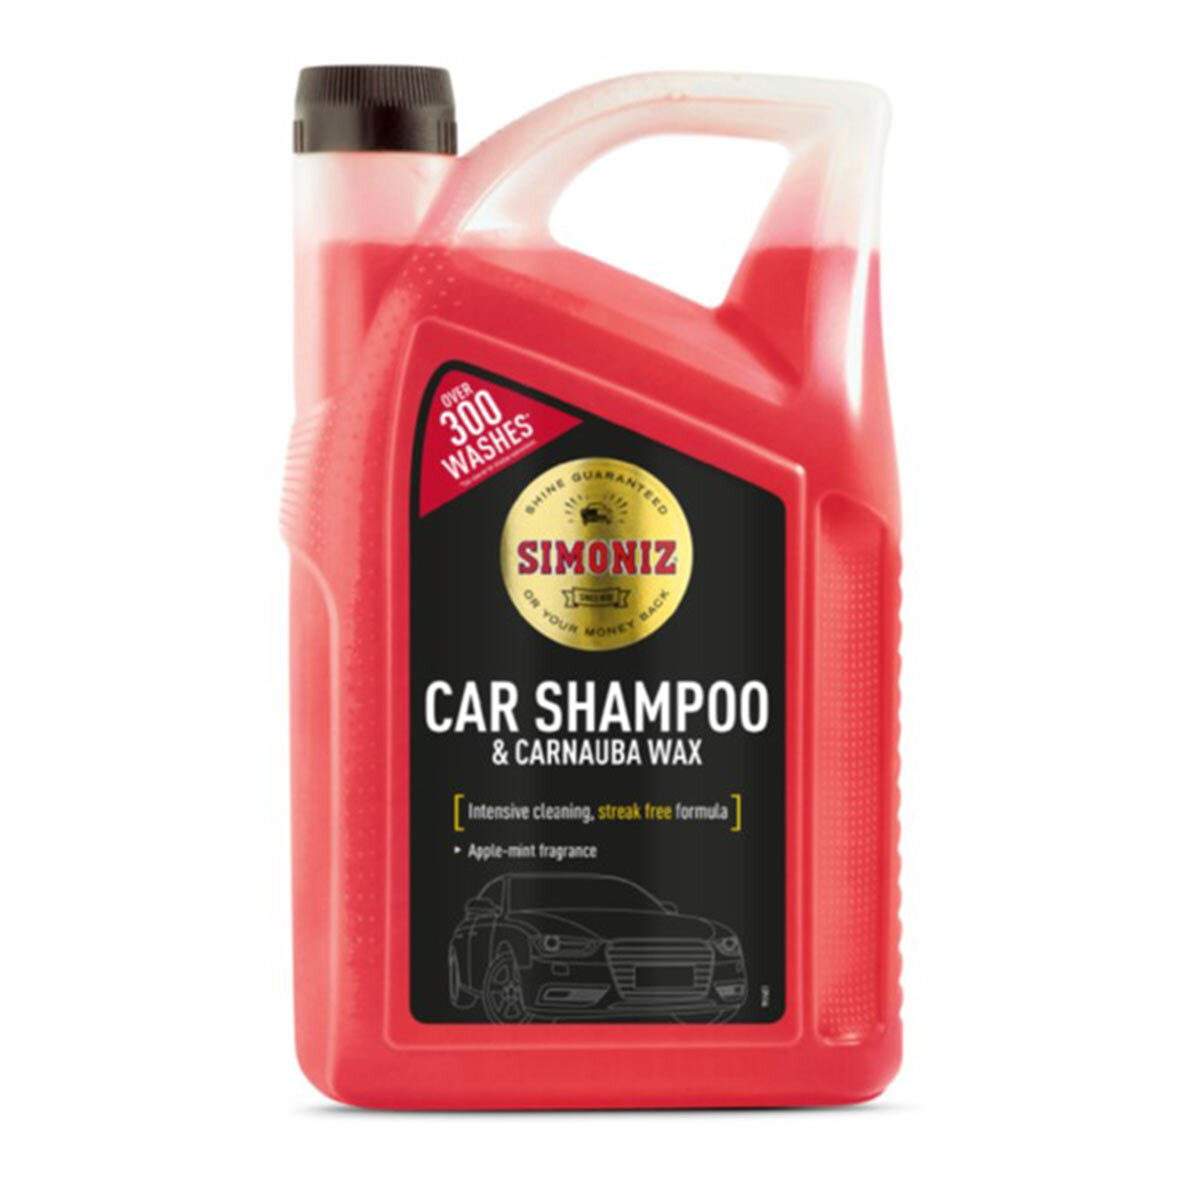 Simoniz Car Shampoo with Carnbuba Wax - 5 Litre | Costco UK